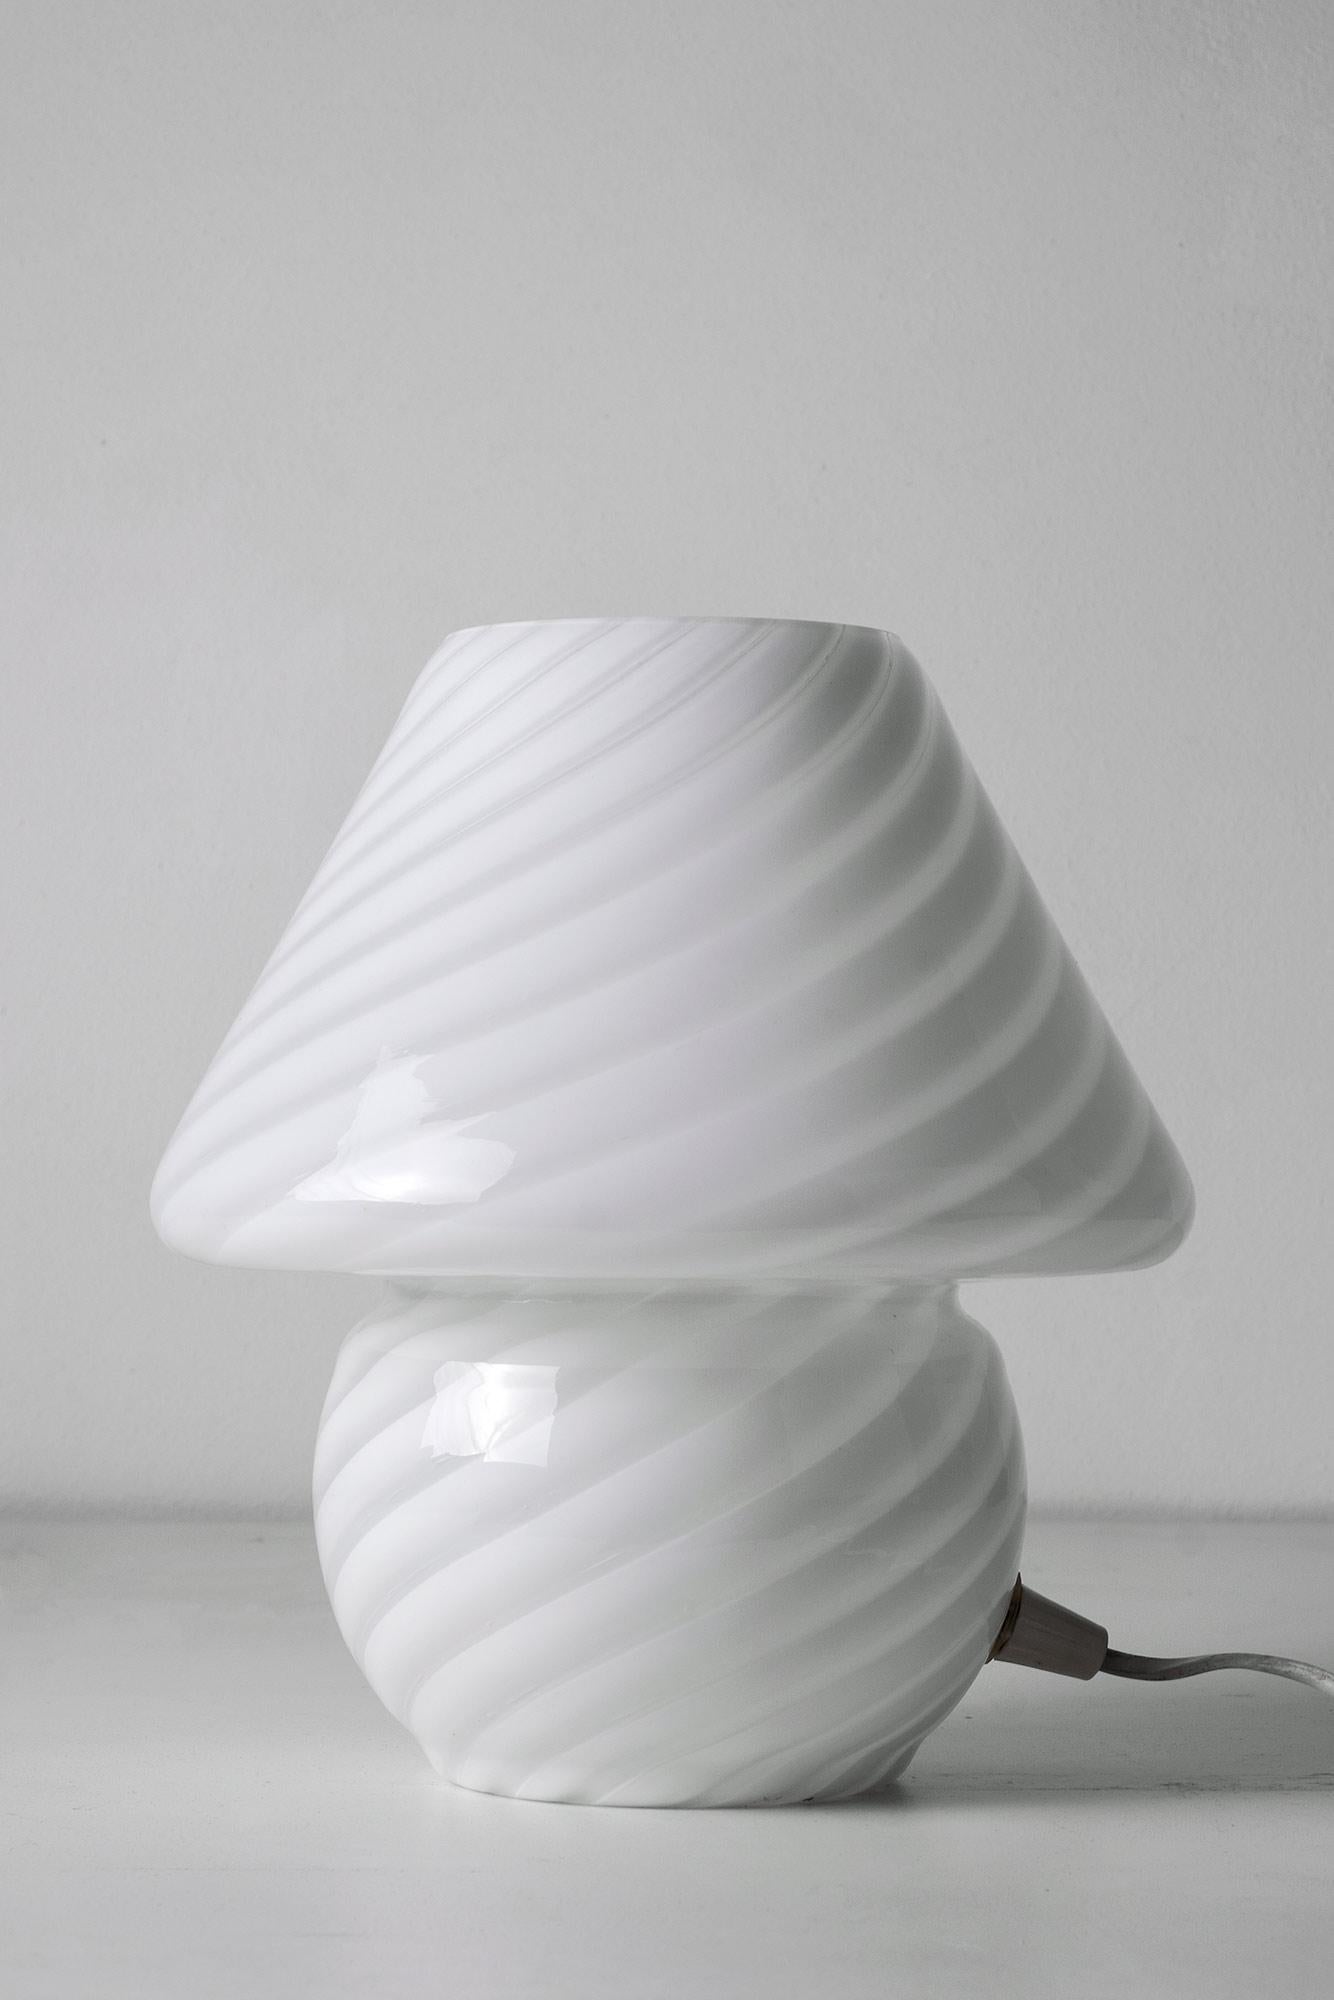 Splendid swirl Murano glass table lamp. 
Made of hand blown cased glass. 
Original label “Vetri VM Murano